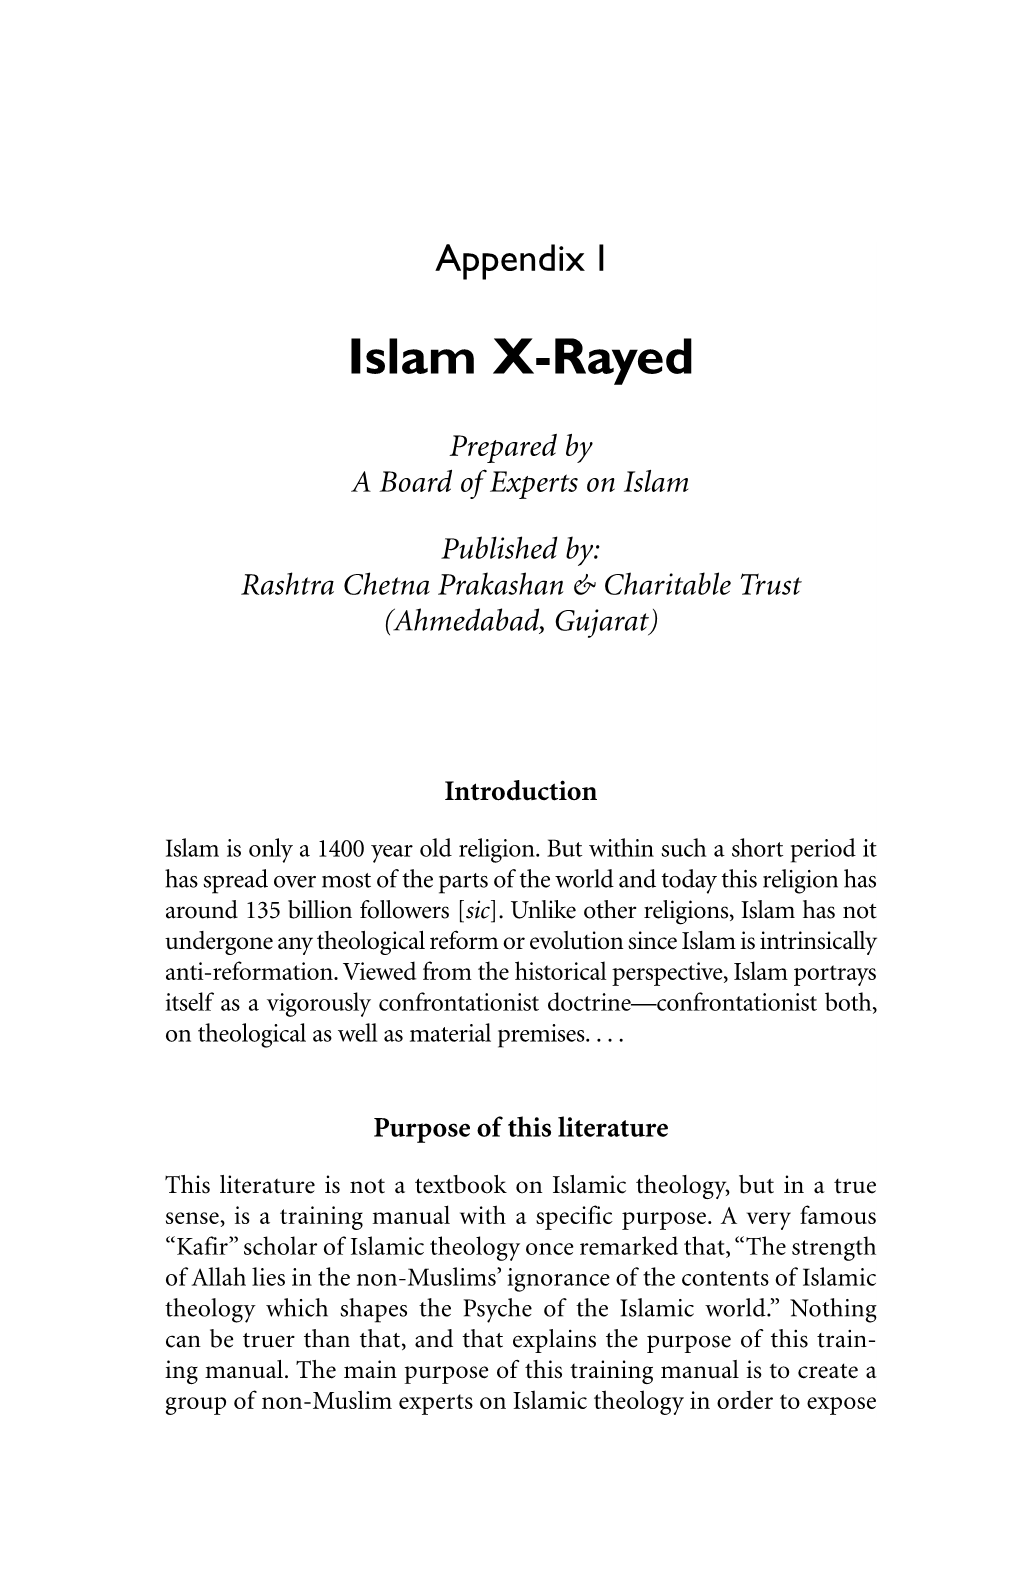 Islam X-Rayed